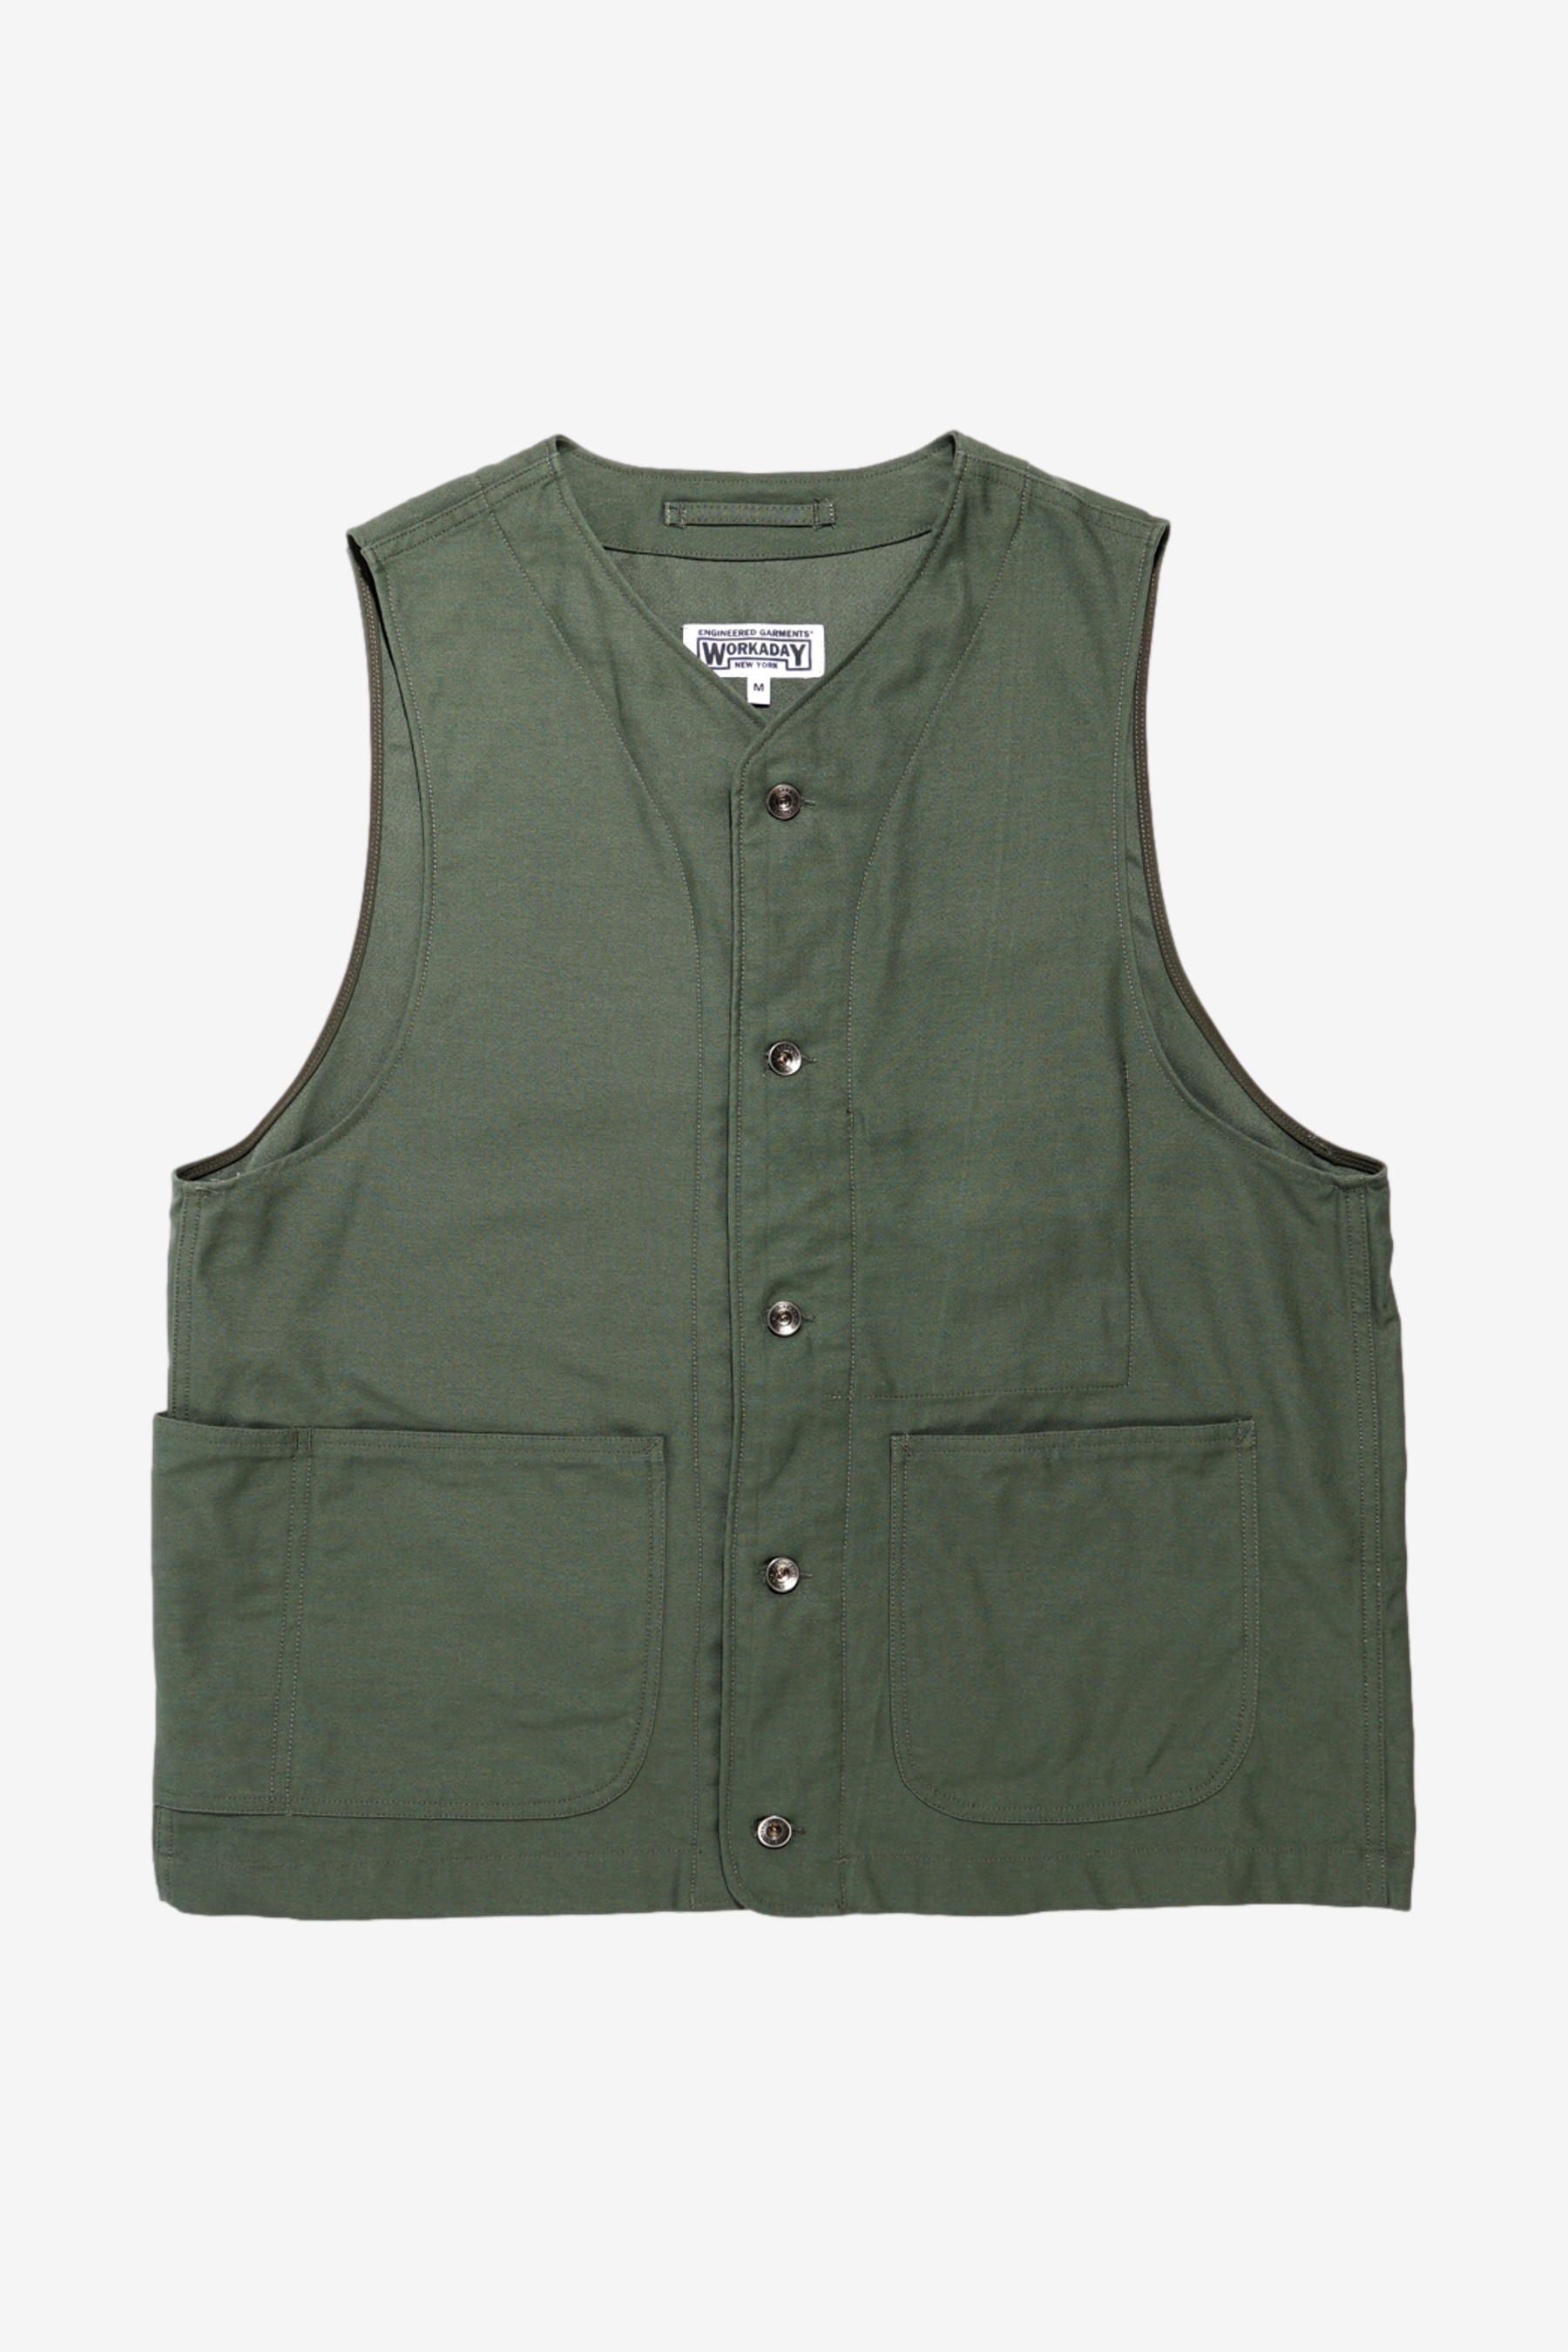 Engineer Vest in Olive Cotton Reverse Sateen - Engineered Garments